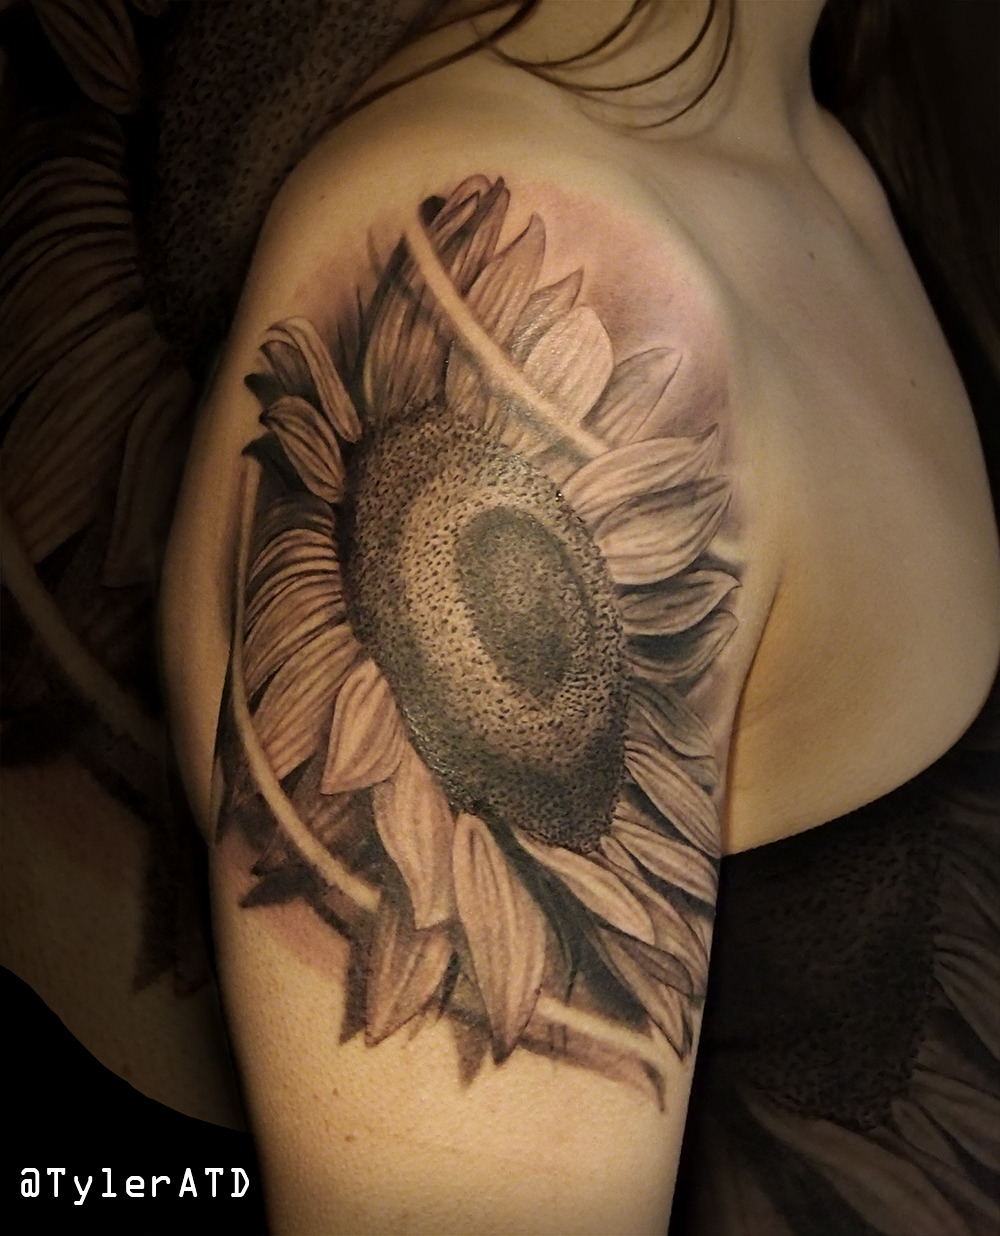 Tyler ATD Tattoos - Realistic black and grey sunflower tattoo....